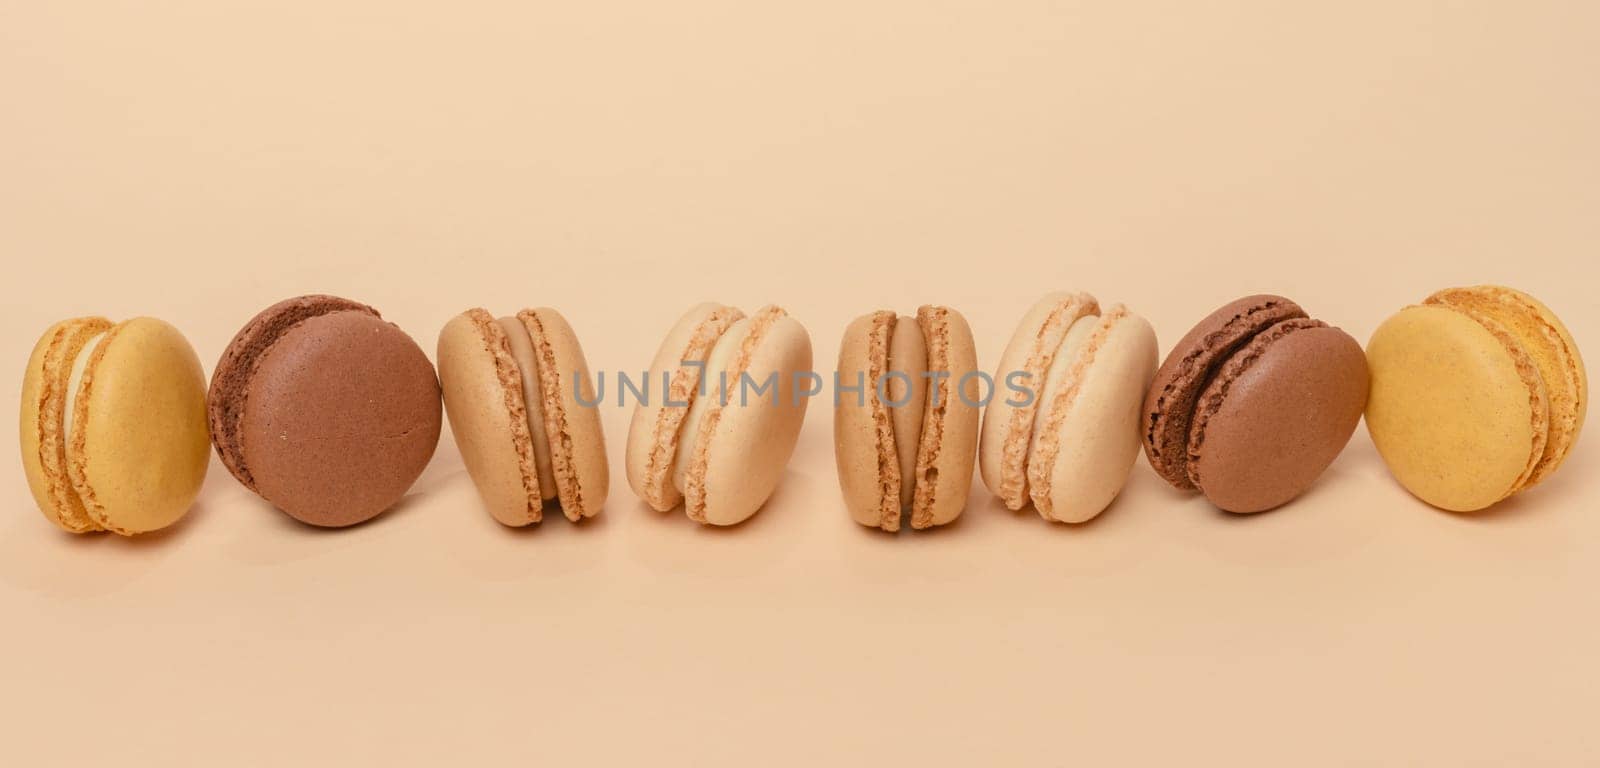 Chocolate macarons on a beige background, dessert by ndanko